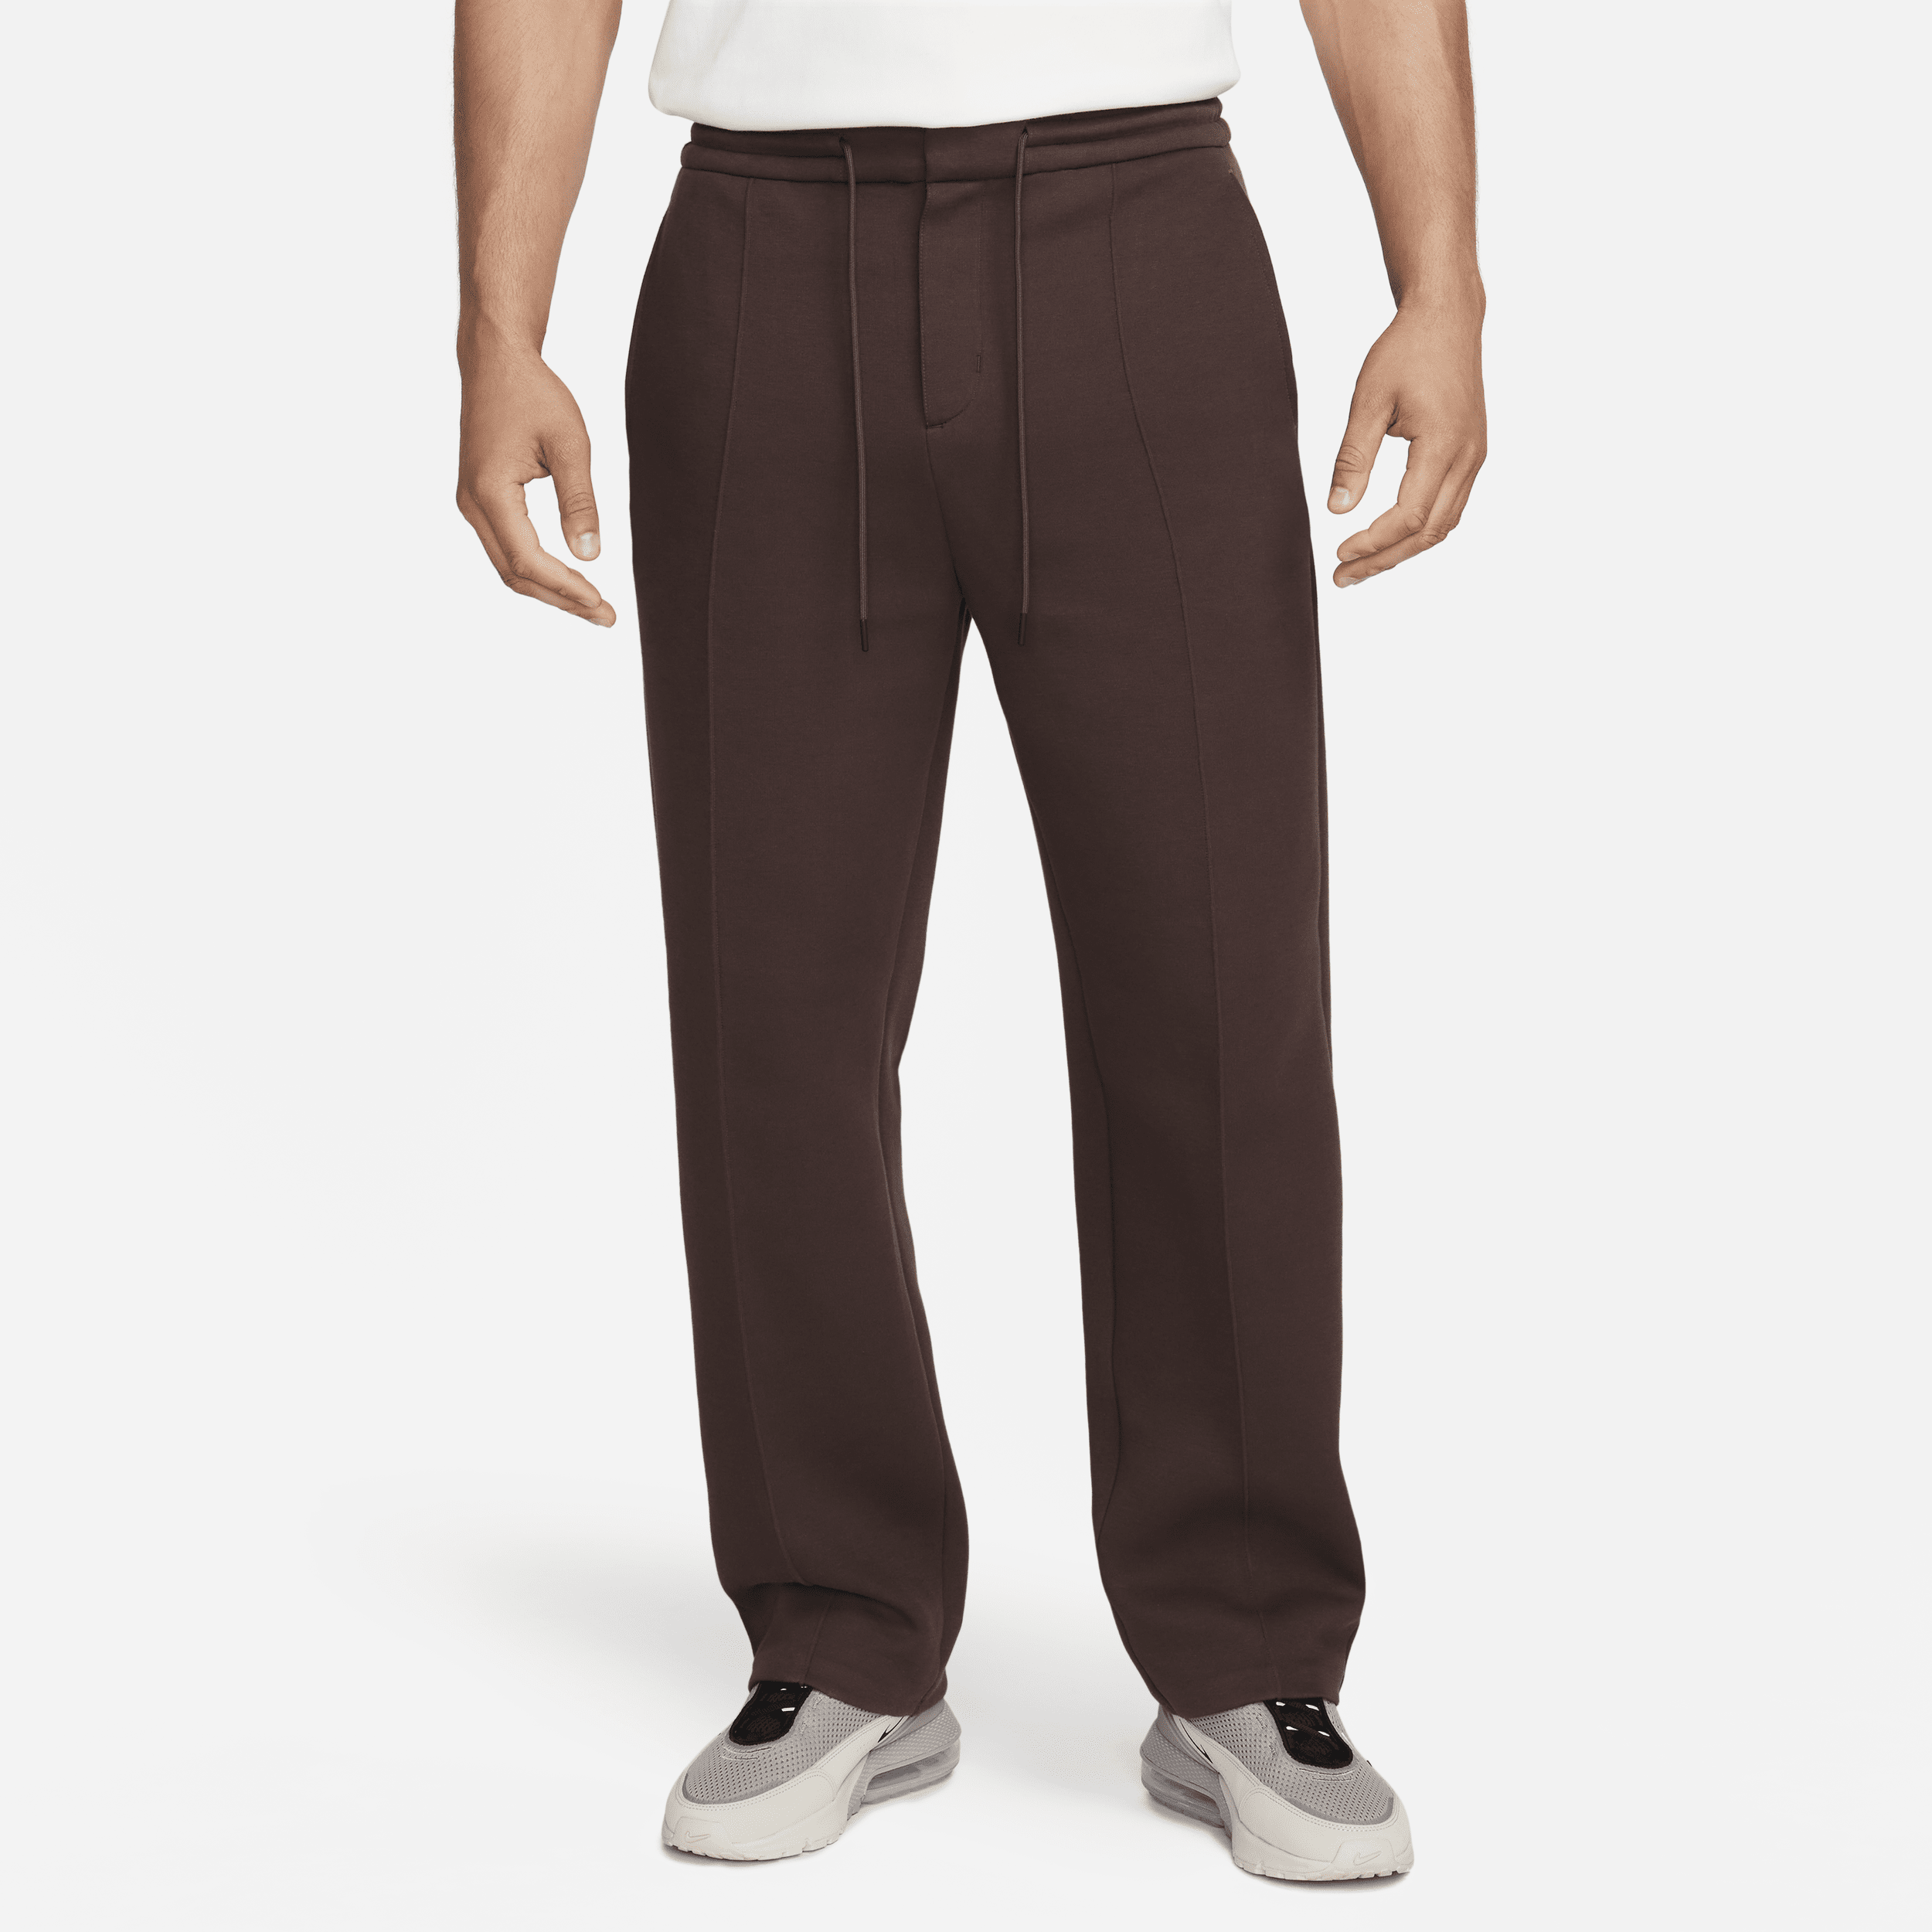 Pantaloni tuta Loose Fit con orlo aperto Nike Sportswear Tech Fleece Reimagined – Uomo - Marrone